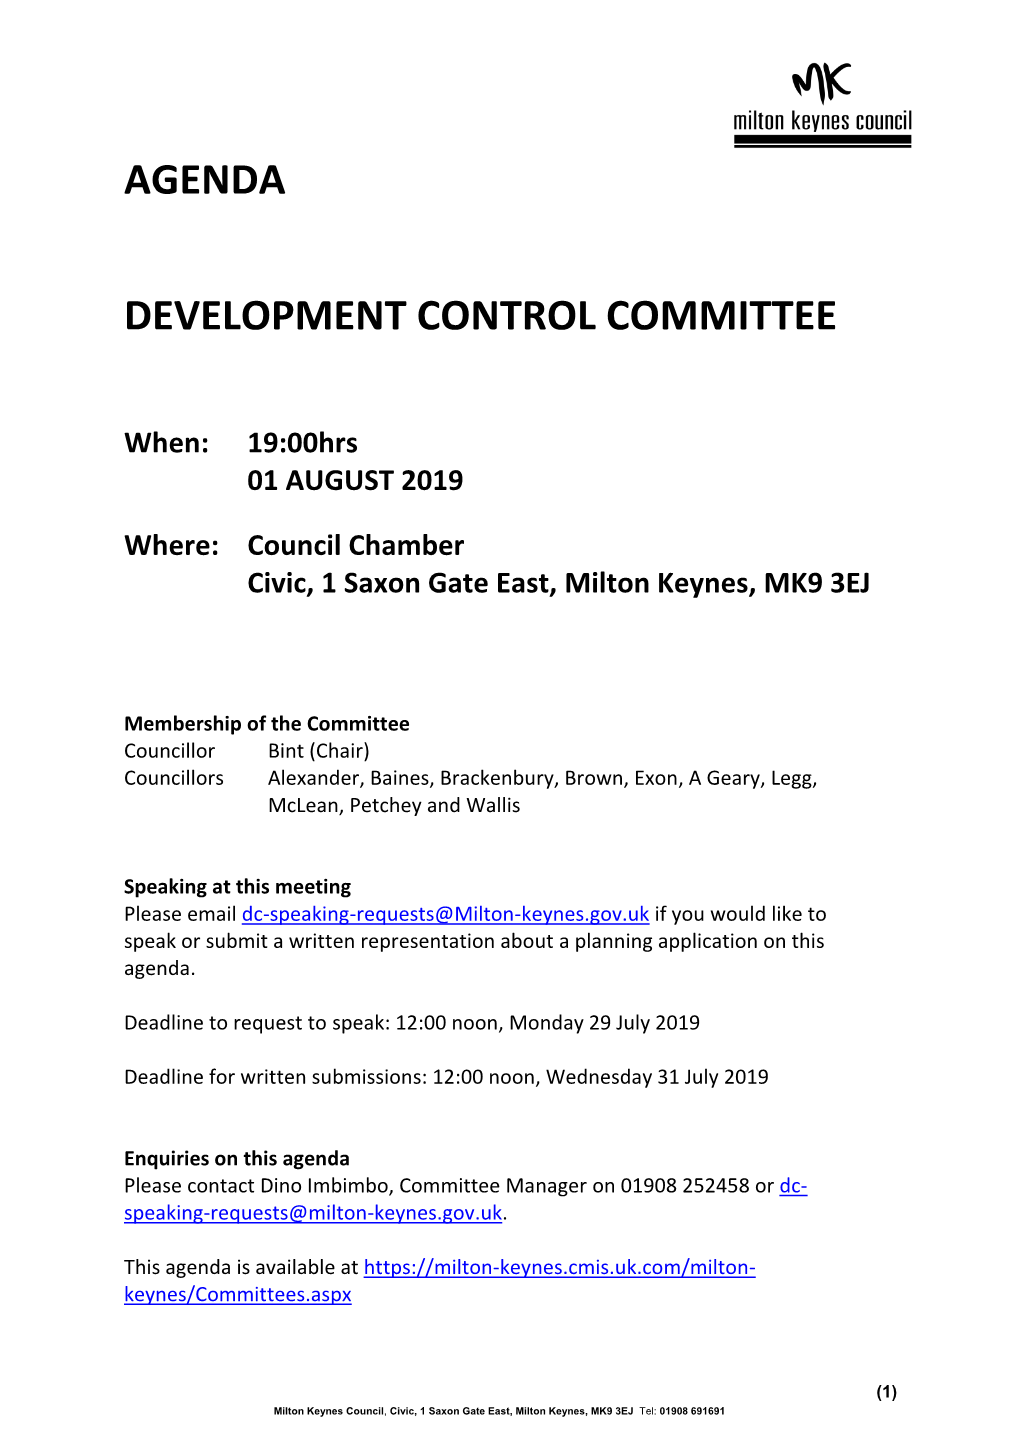 Agenda Development Control Committee